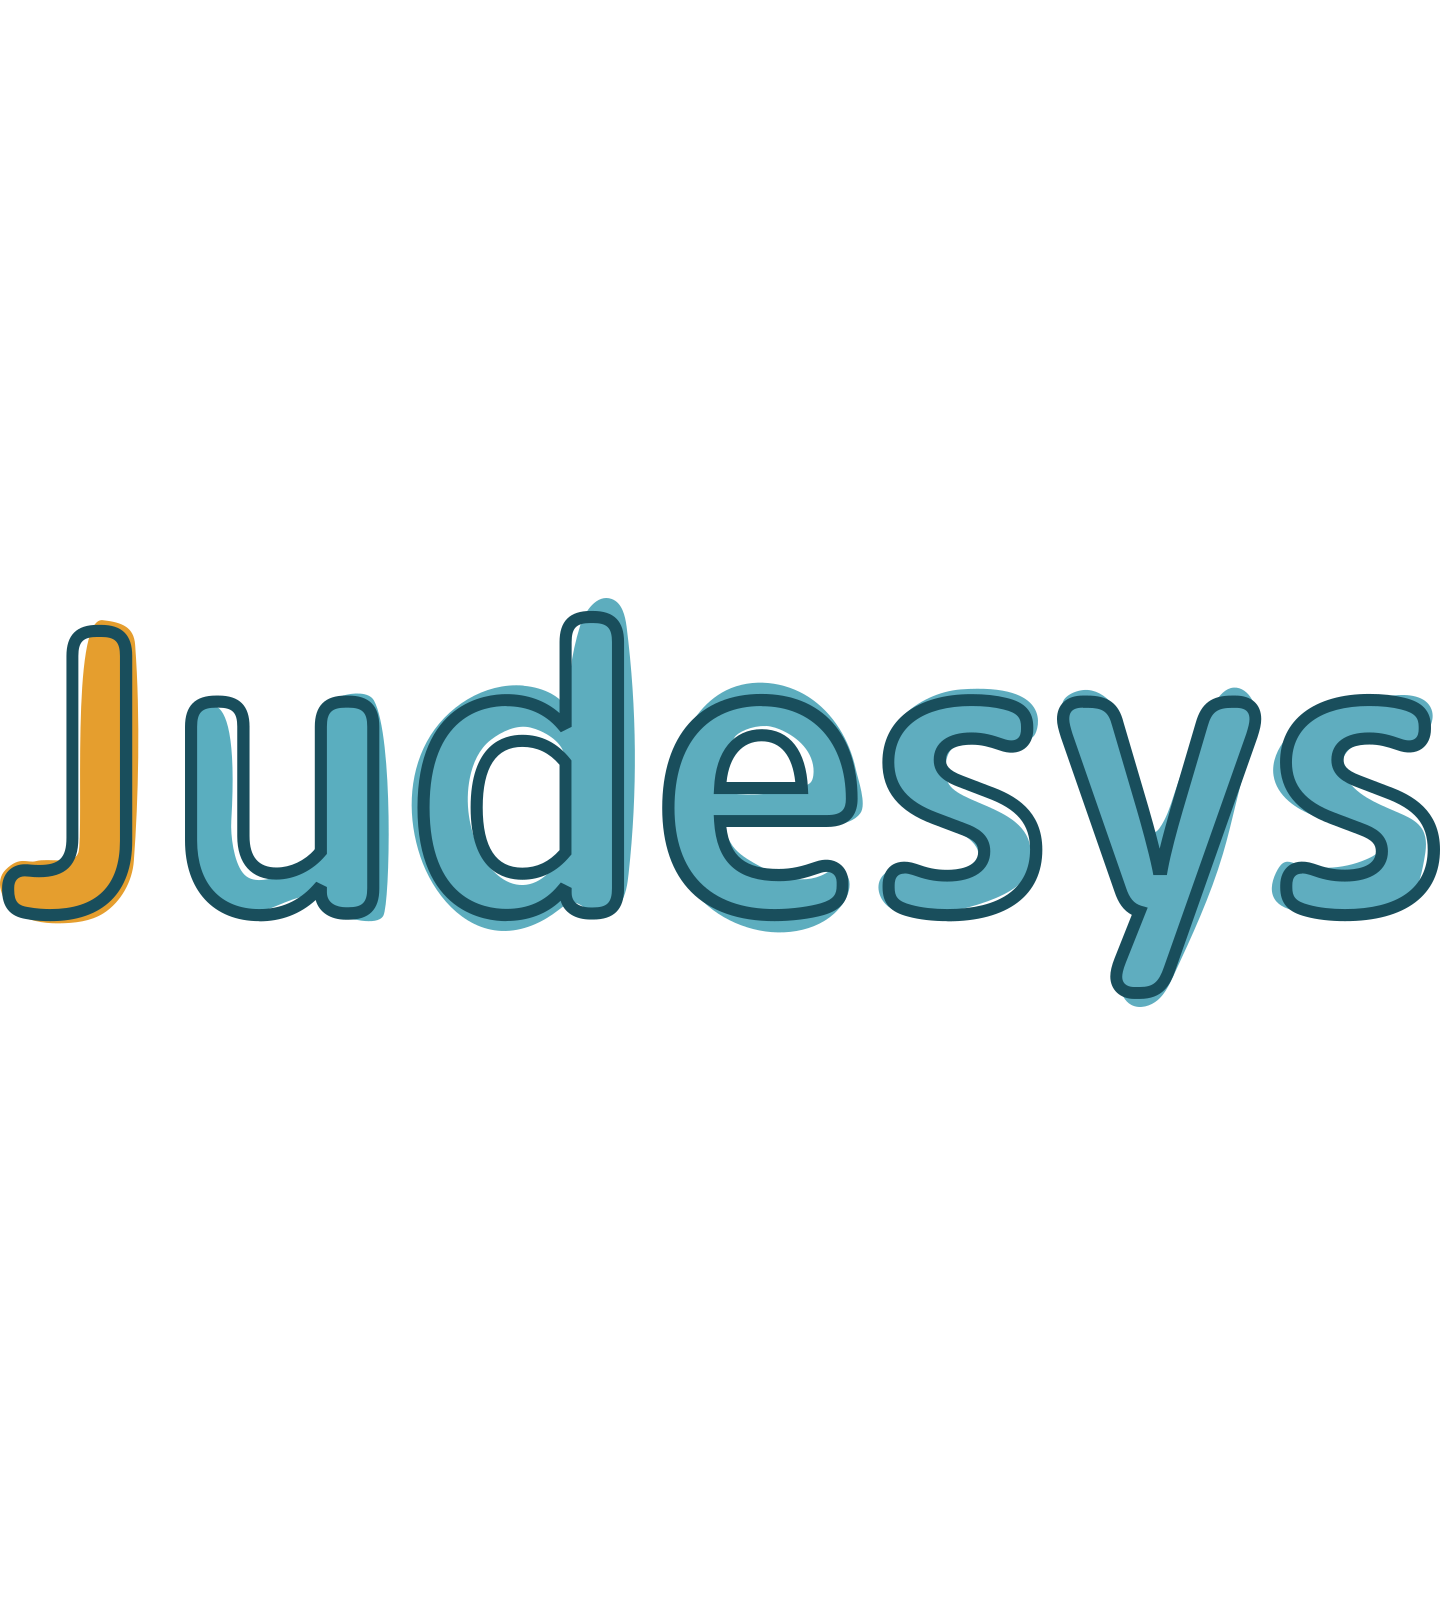 Judesys